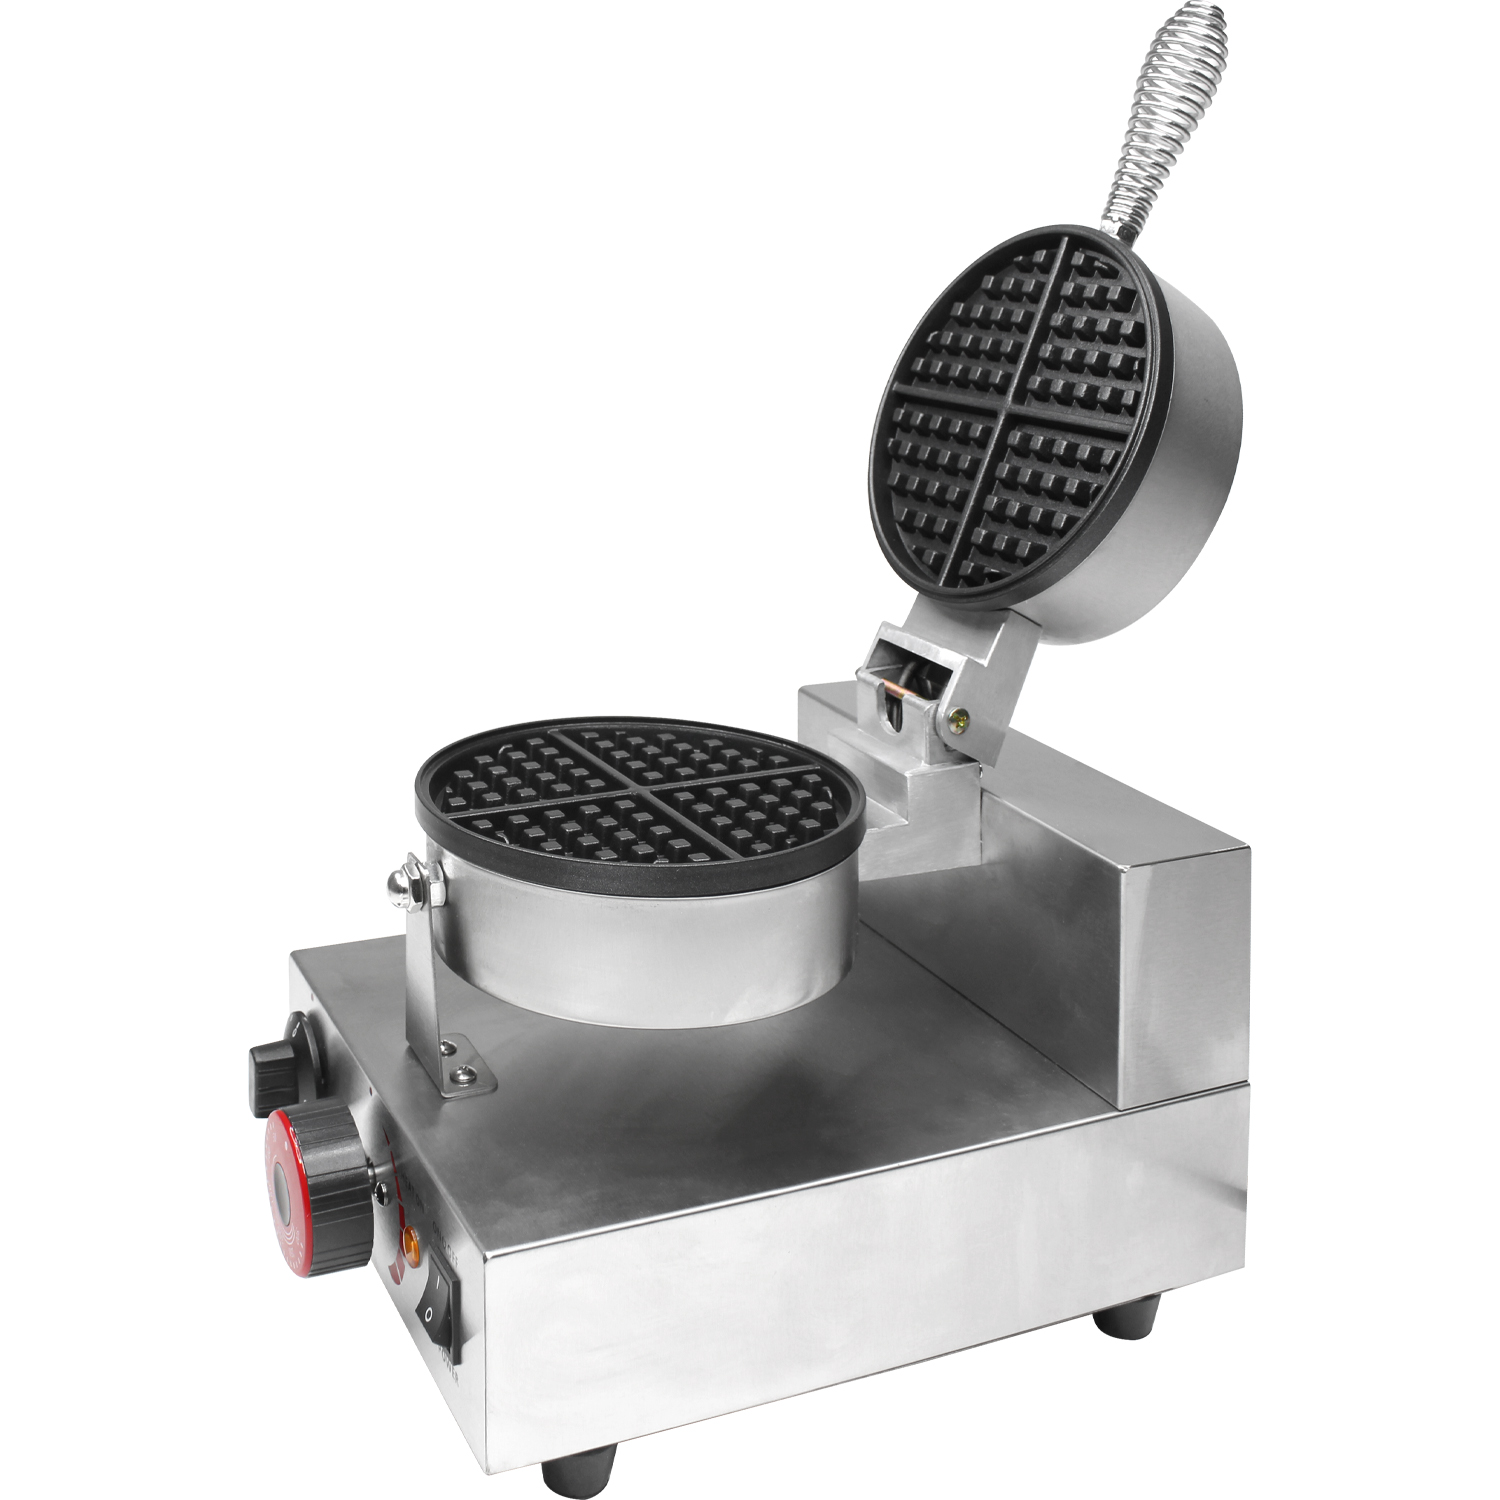 Maquina Wafflera Industrial Acero Inoxidable Antiadherente Teflon300°C